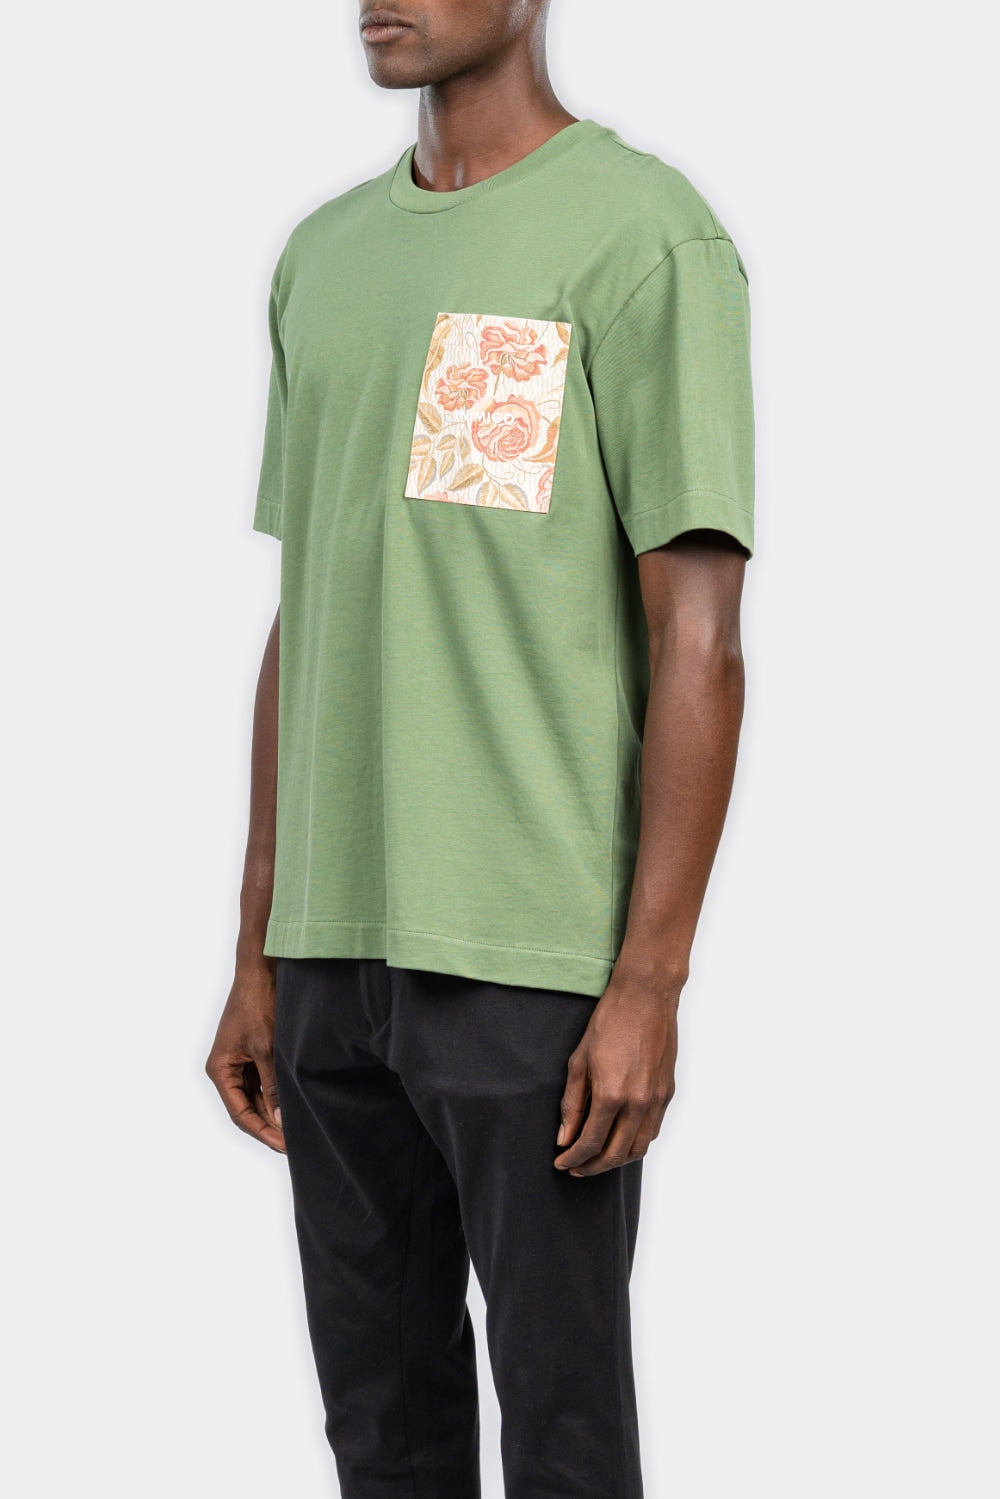 INIMIGO Pocket Flower Monogram Comfort T-shirt